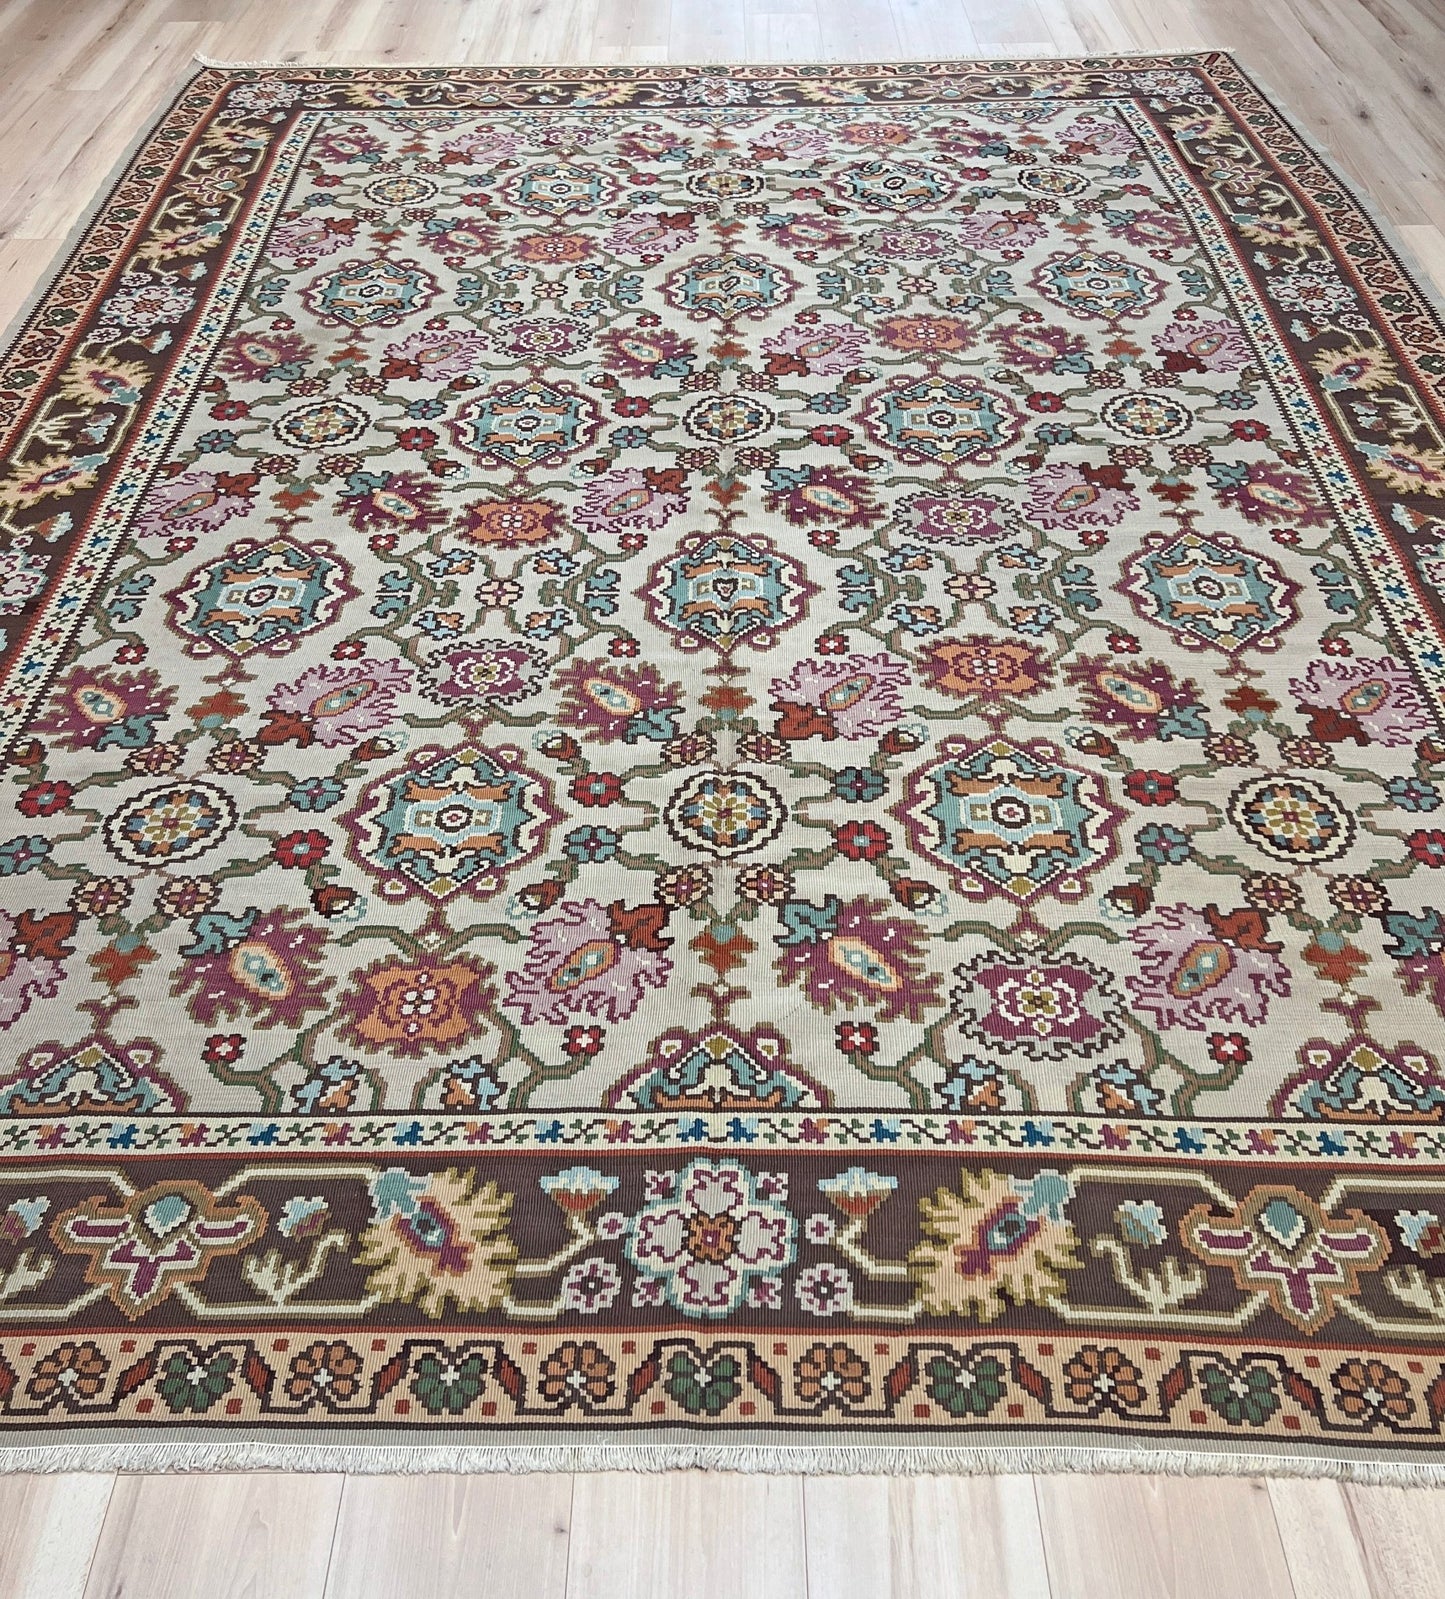 Antique Floral Balkan Turkish kilim rug. Oriental rugs shop san Francisco bay area. Buy Kilim rug online flatweave Canada USA